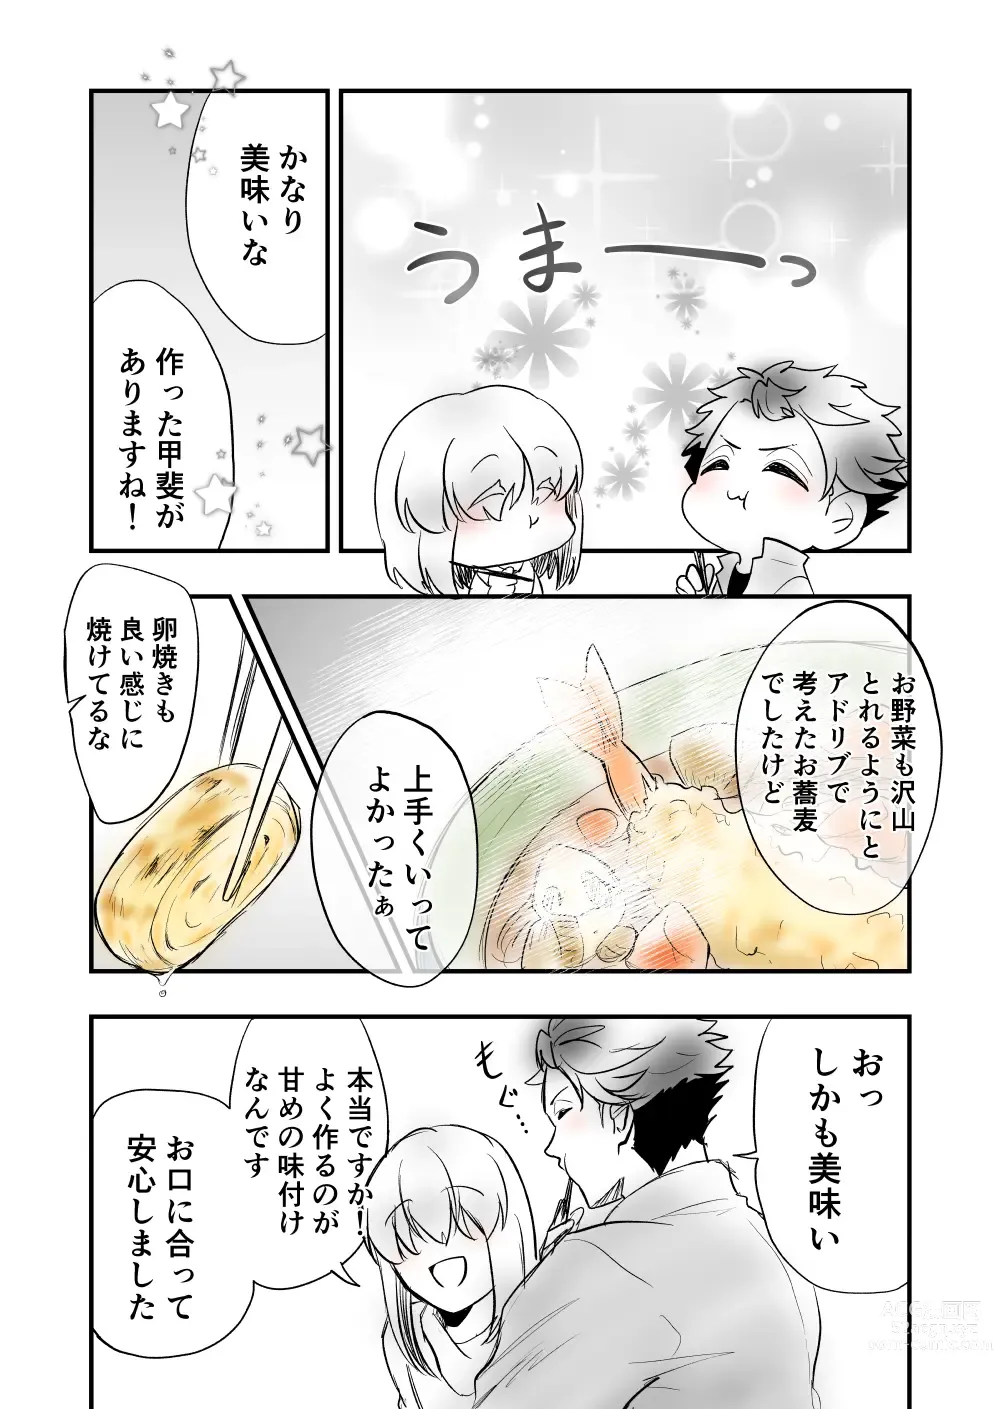 Page 12 of doujinshi 5